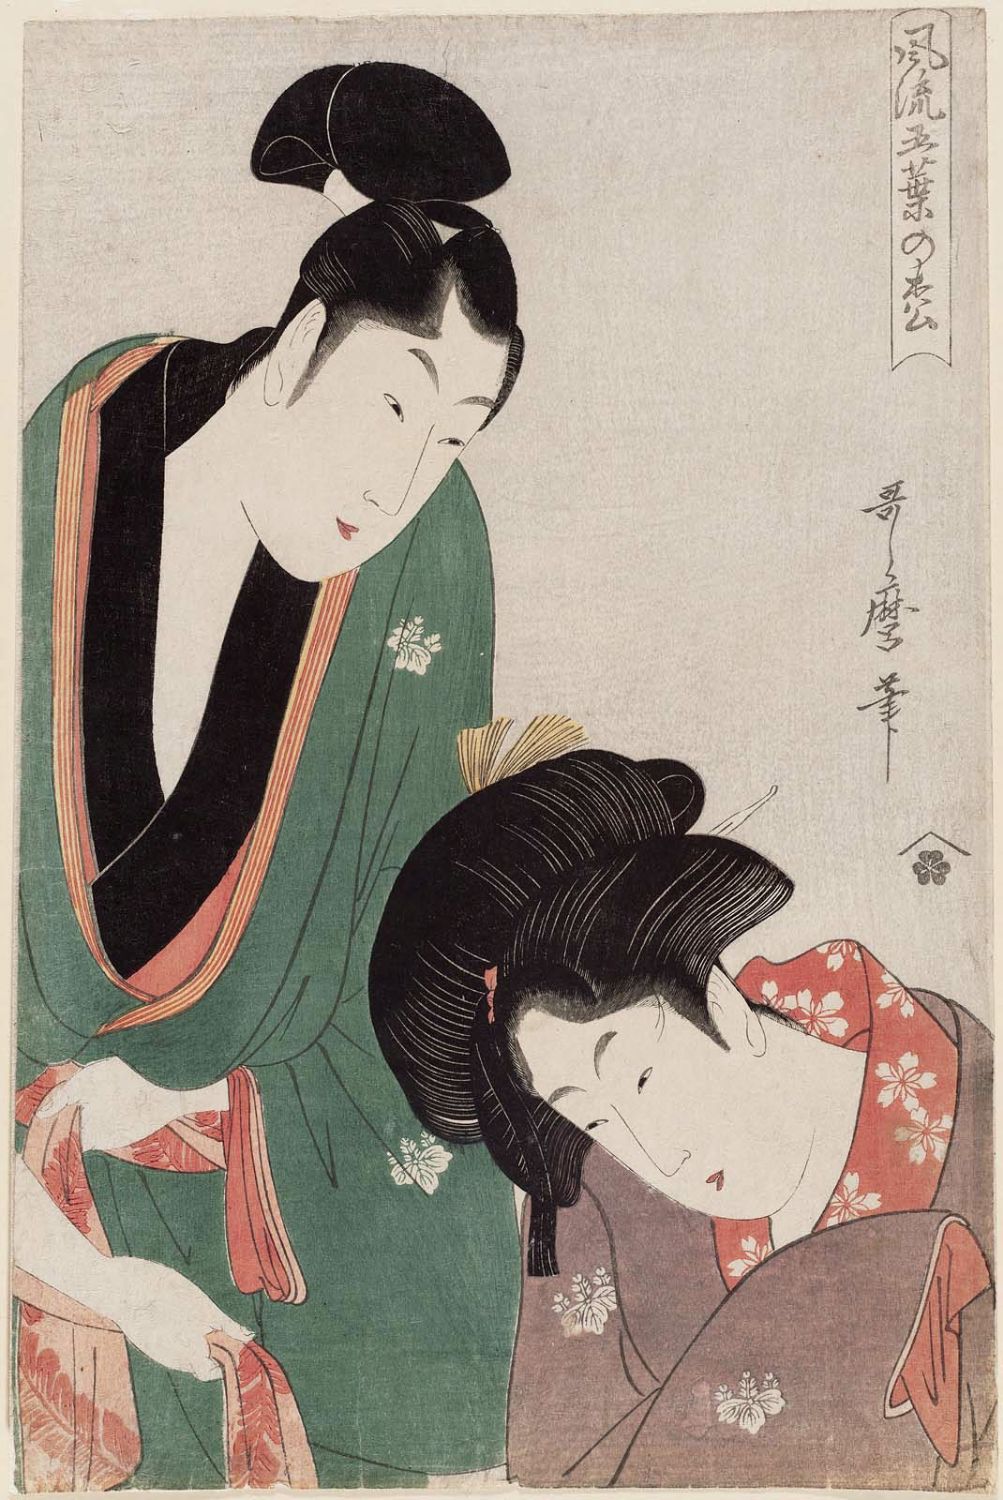 Kitagawa Utamaro: Lovers Parting in the Morning, from the series 